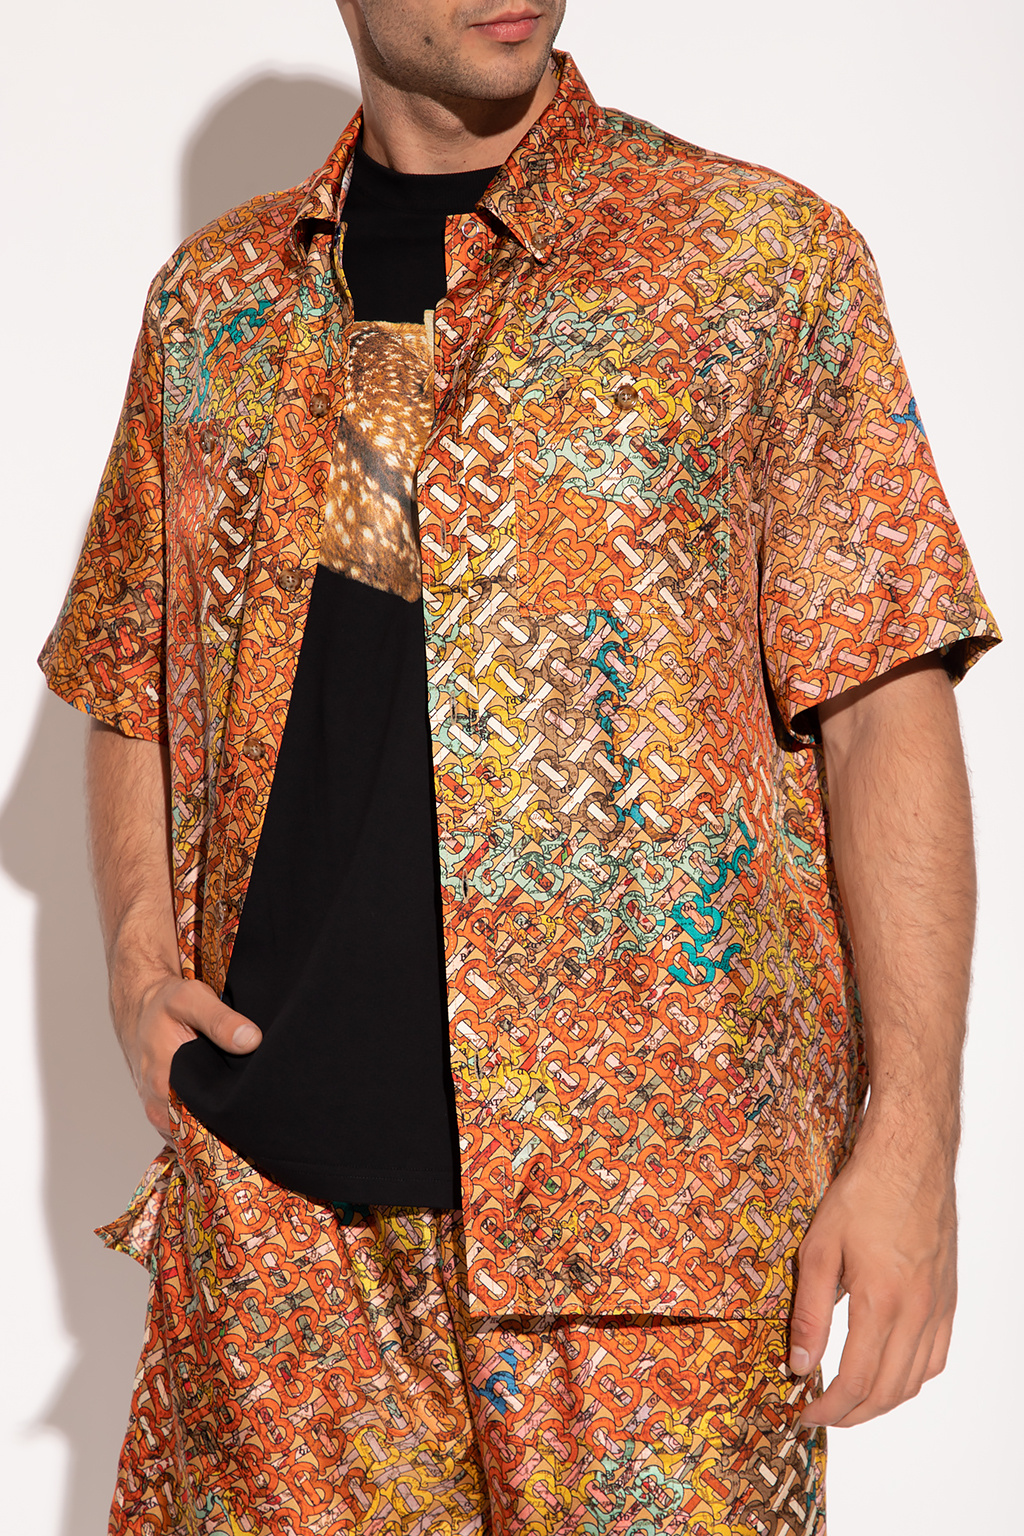 Burberry ‘Wallington’ patterned shirt